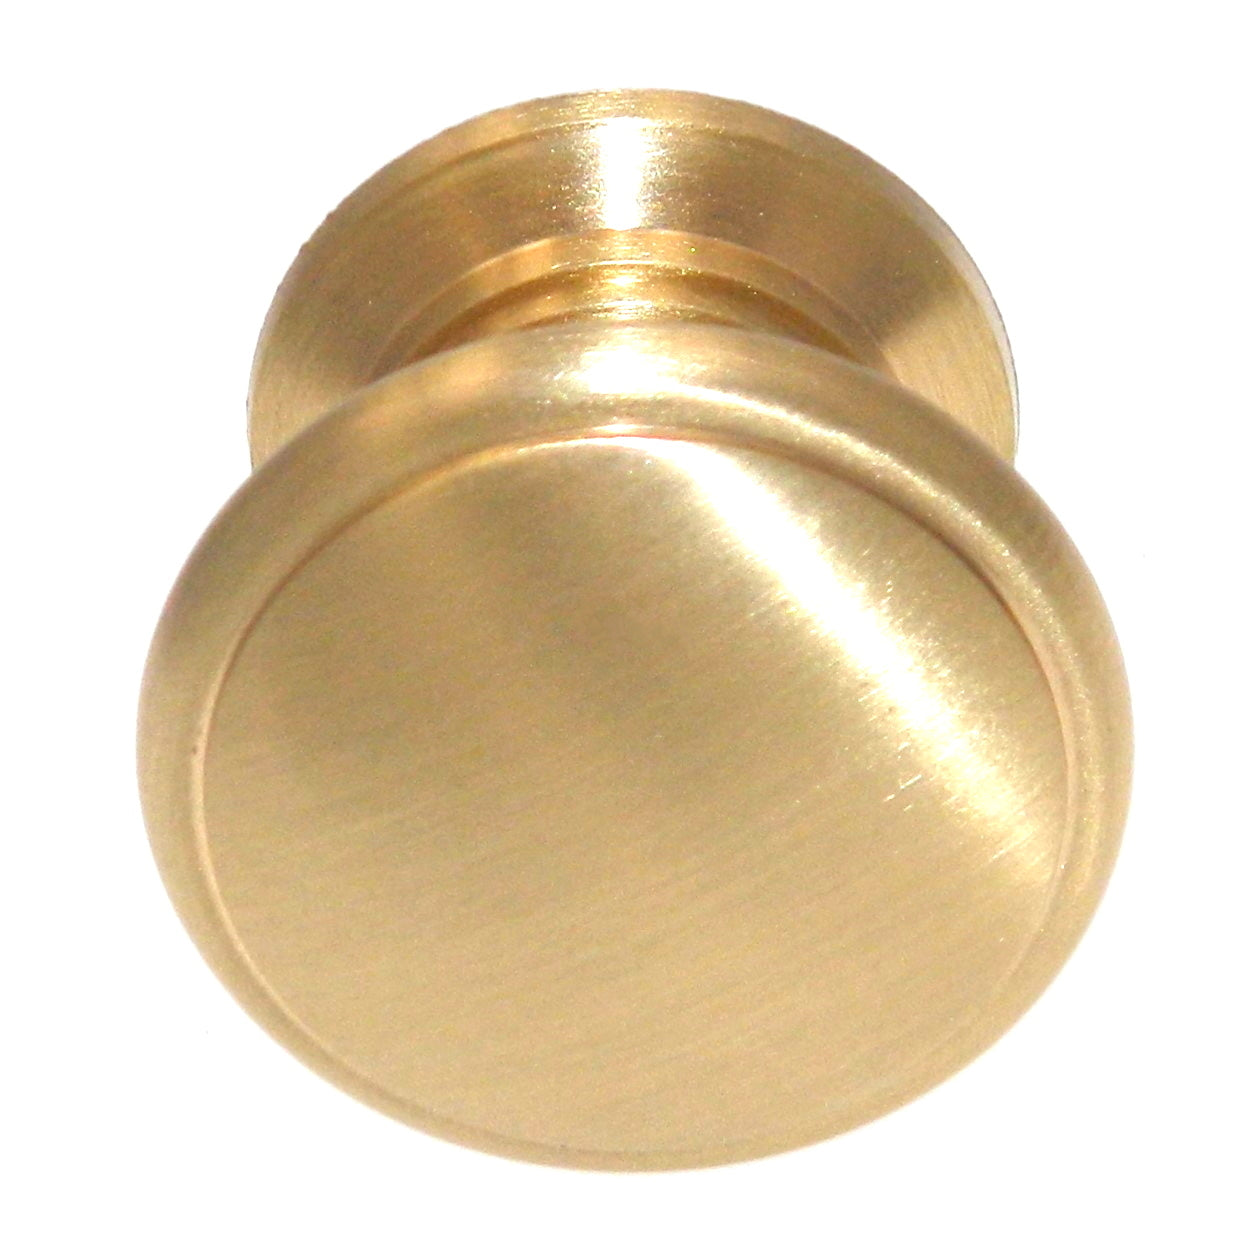 Keeler Power & Beauty Satin Brass 1 1/4" Round Cabinet Solid Brass Knob K44-04